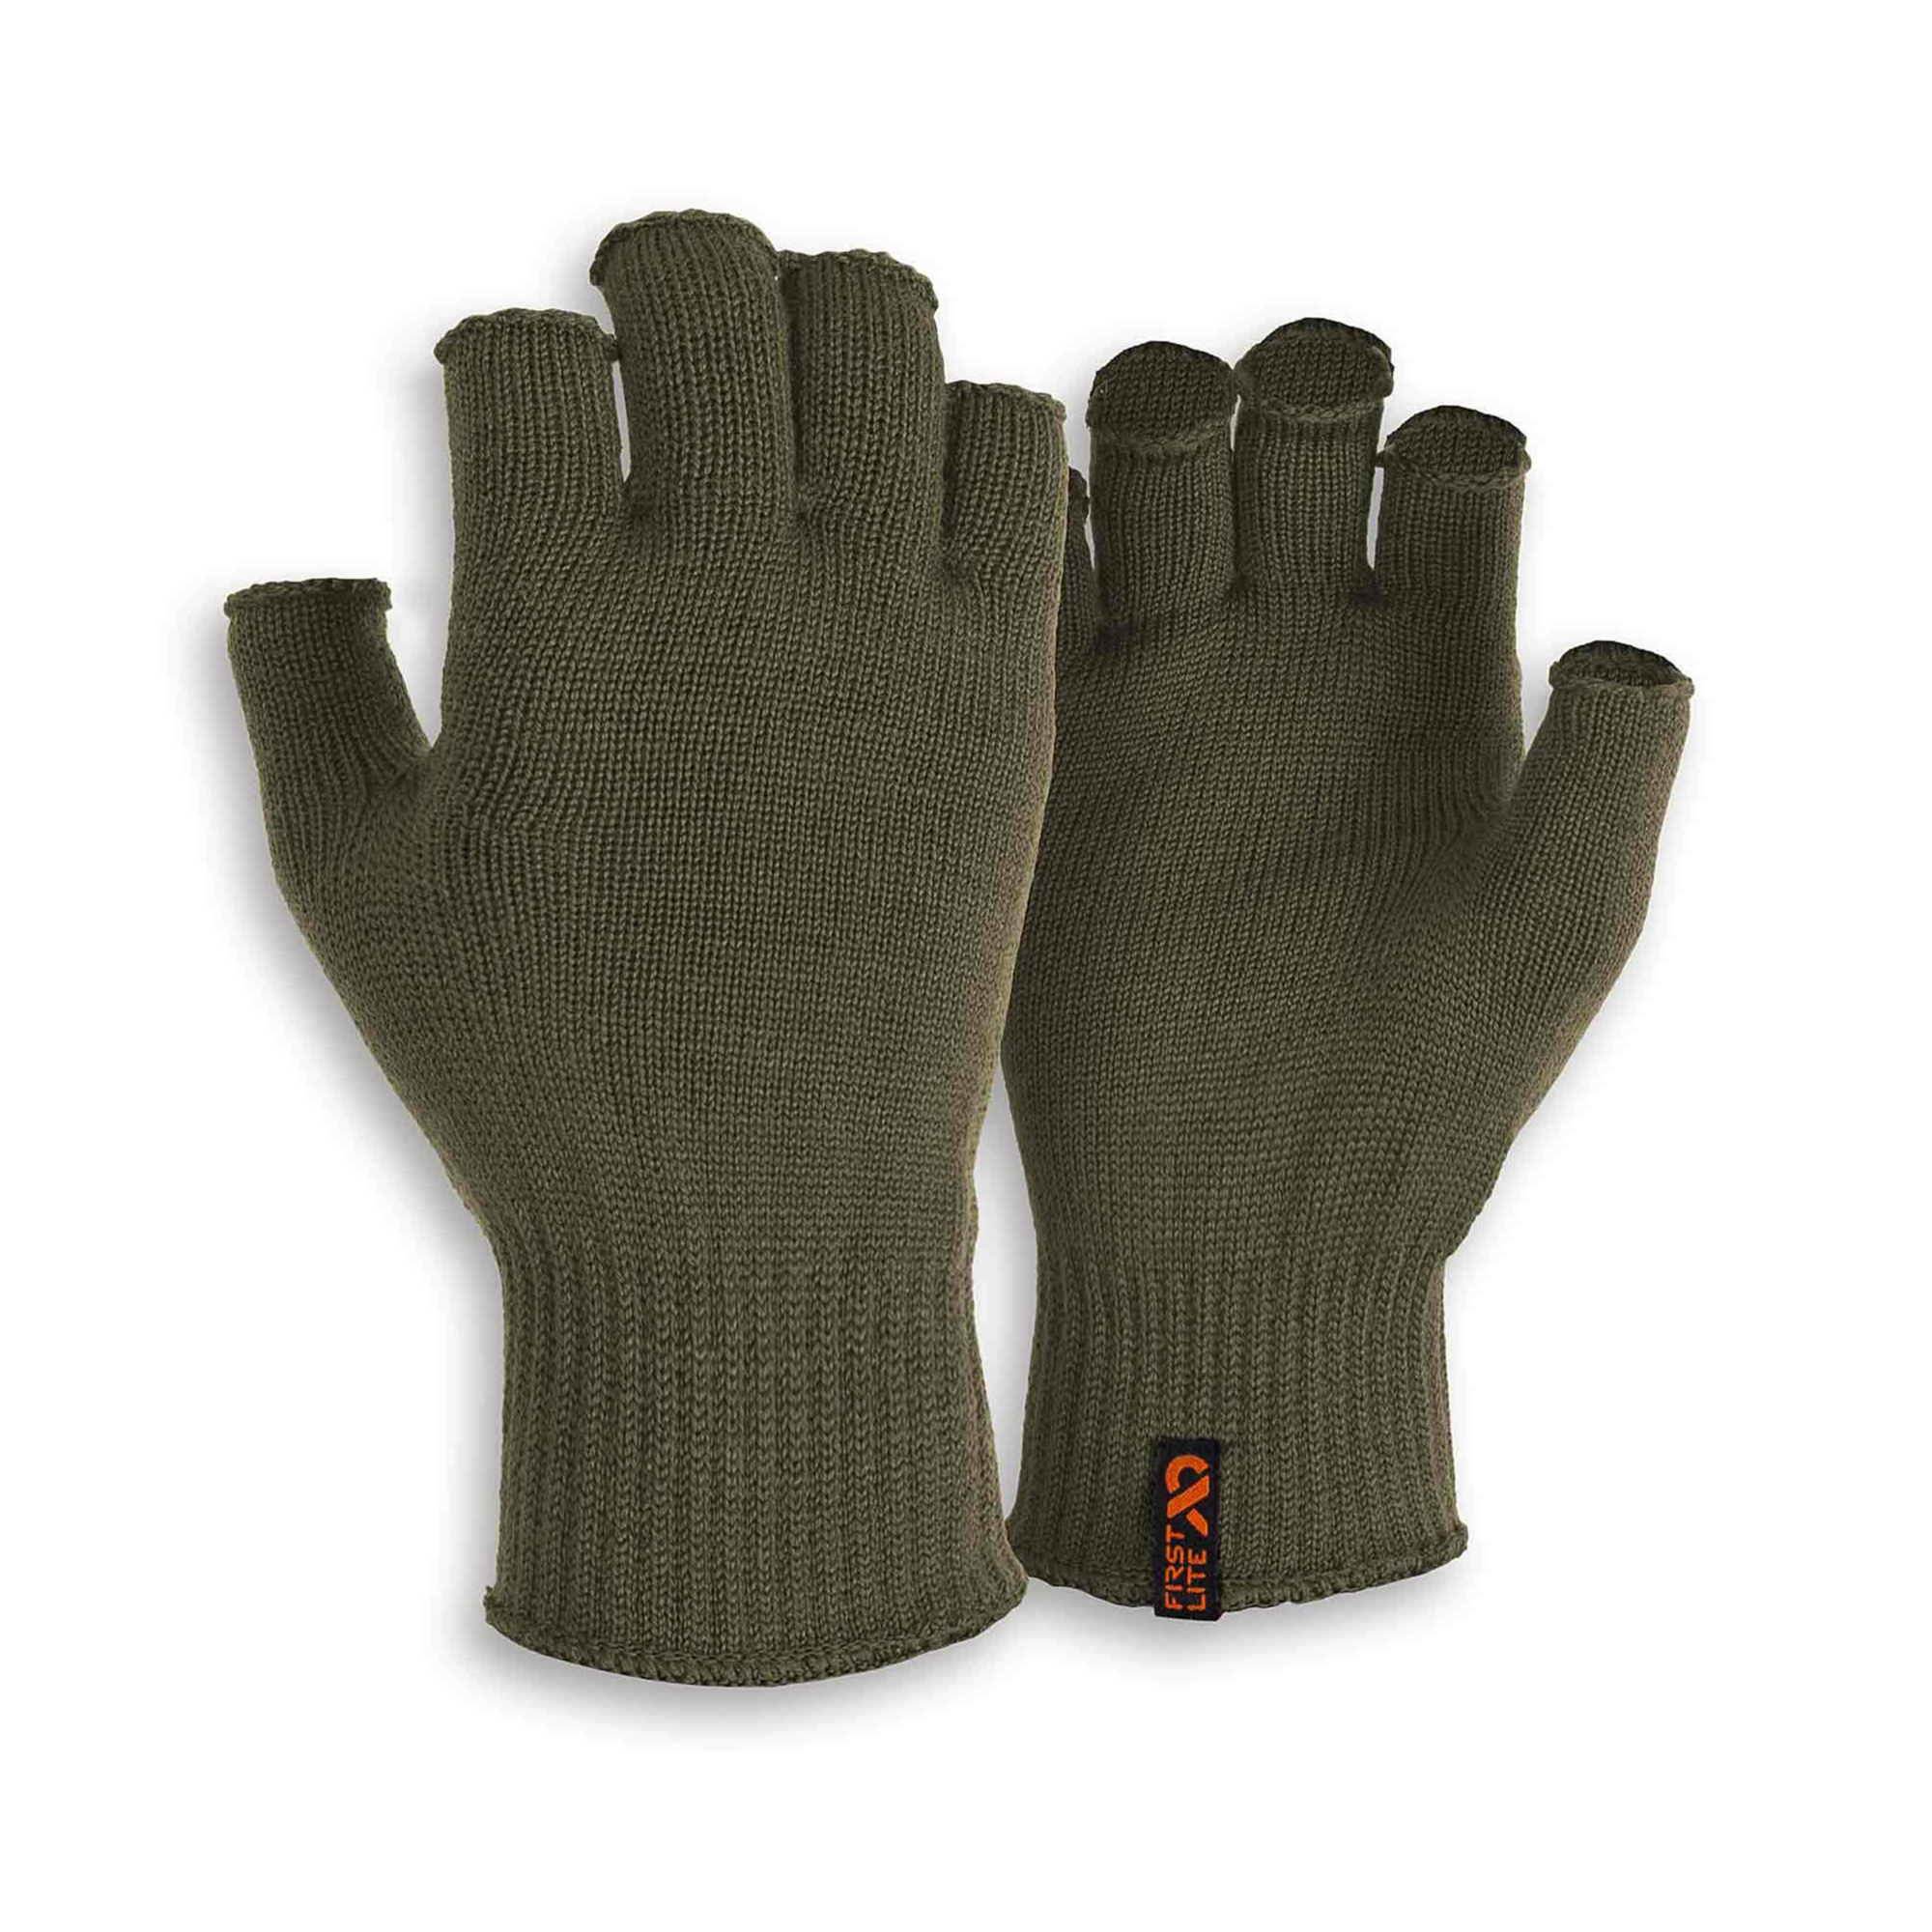 Knit Fingerless Gloves, Superfine Italian Merino Wool, Blue Grey, Large 